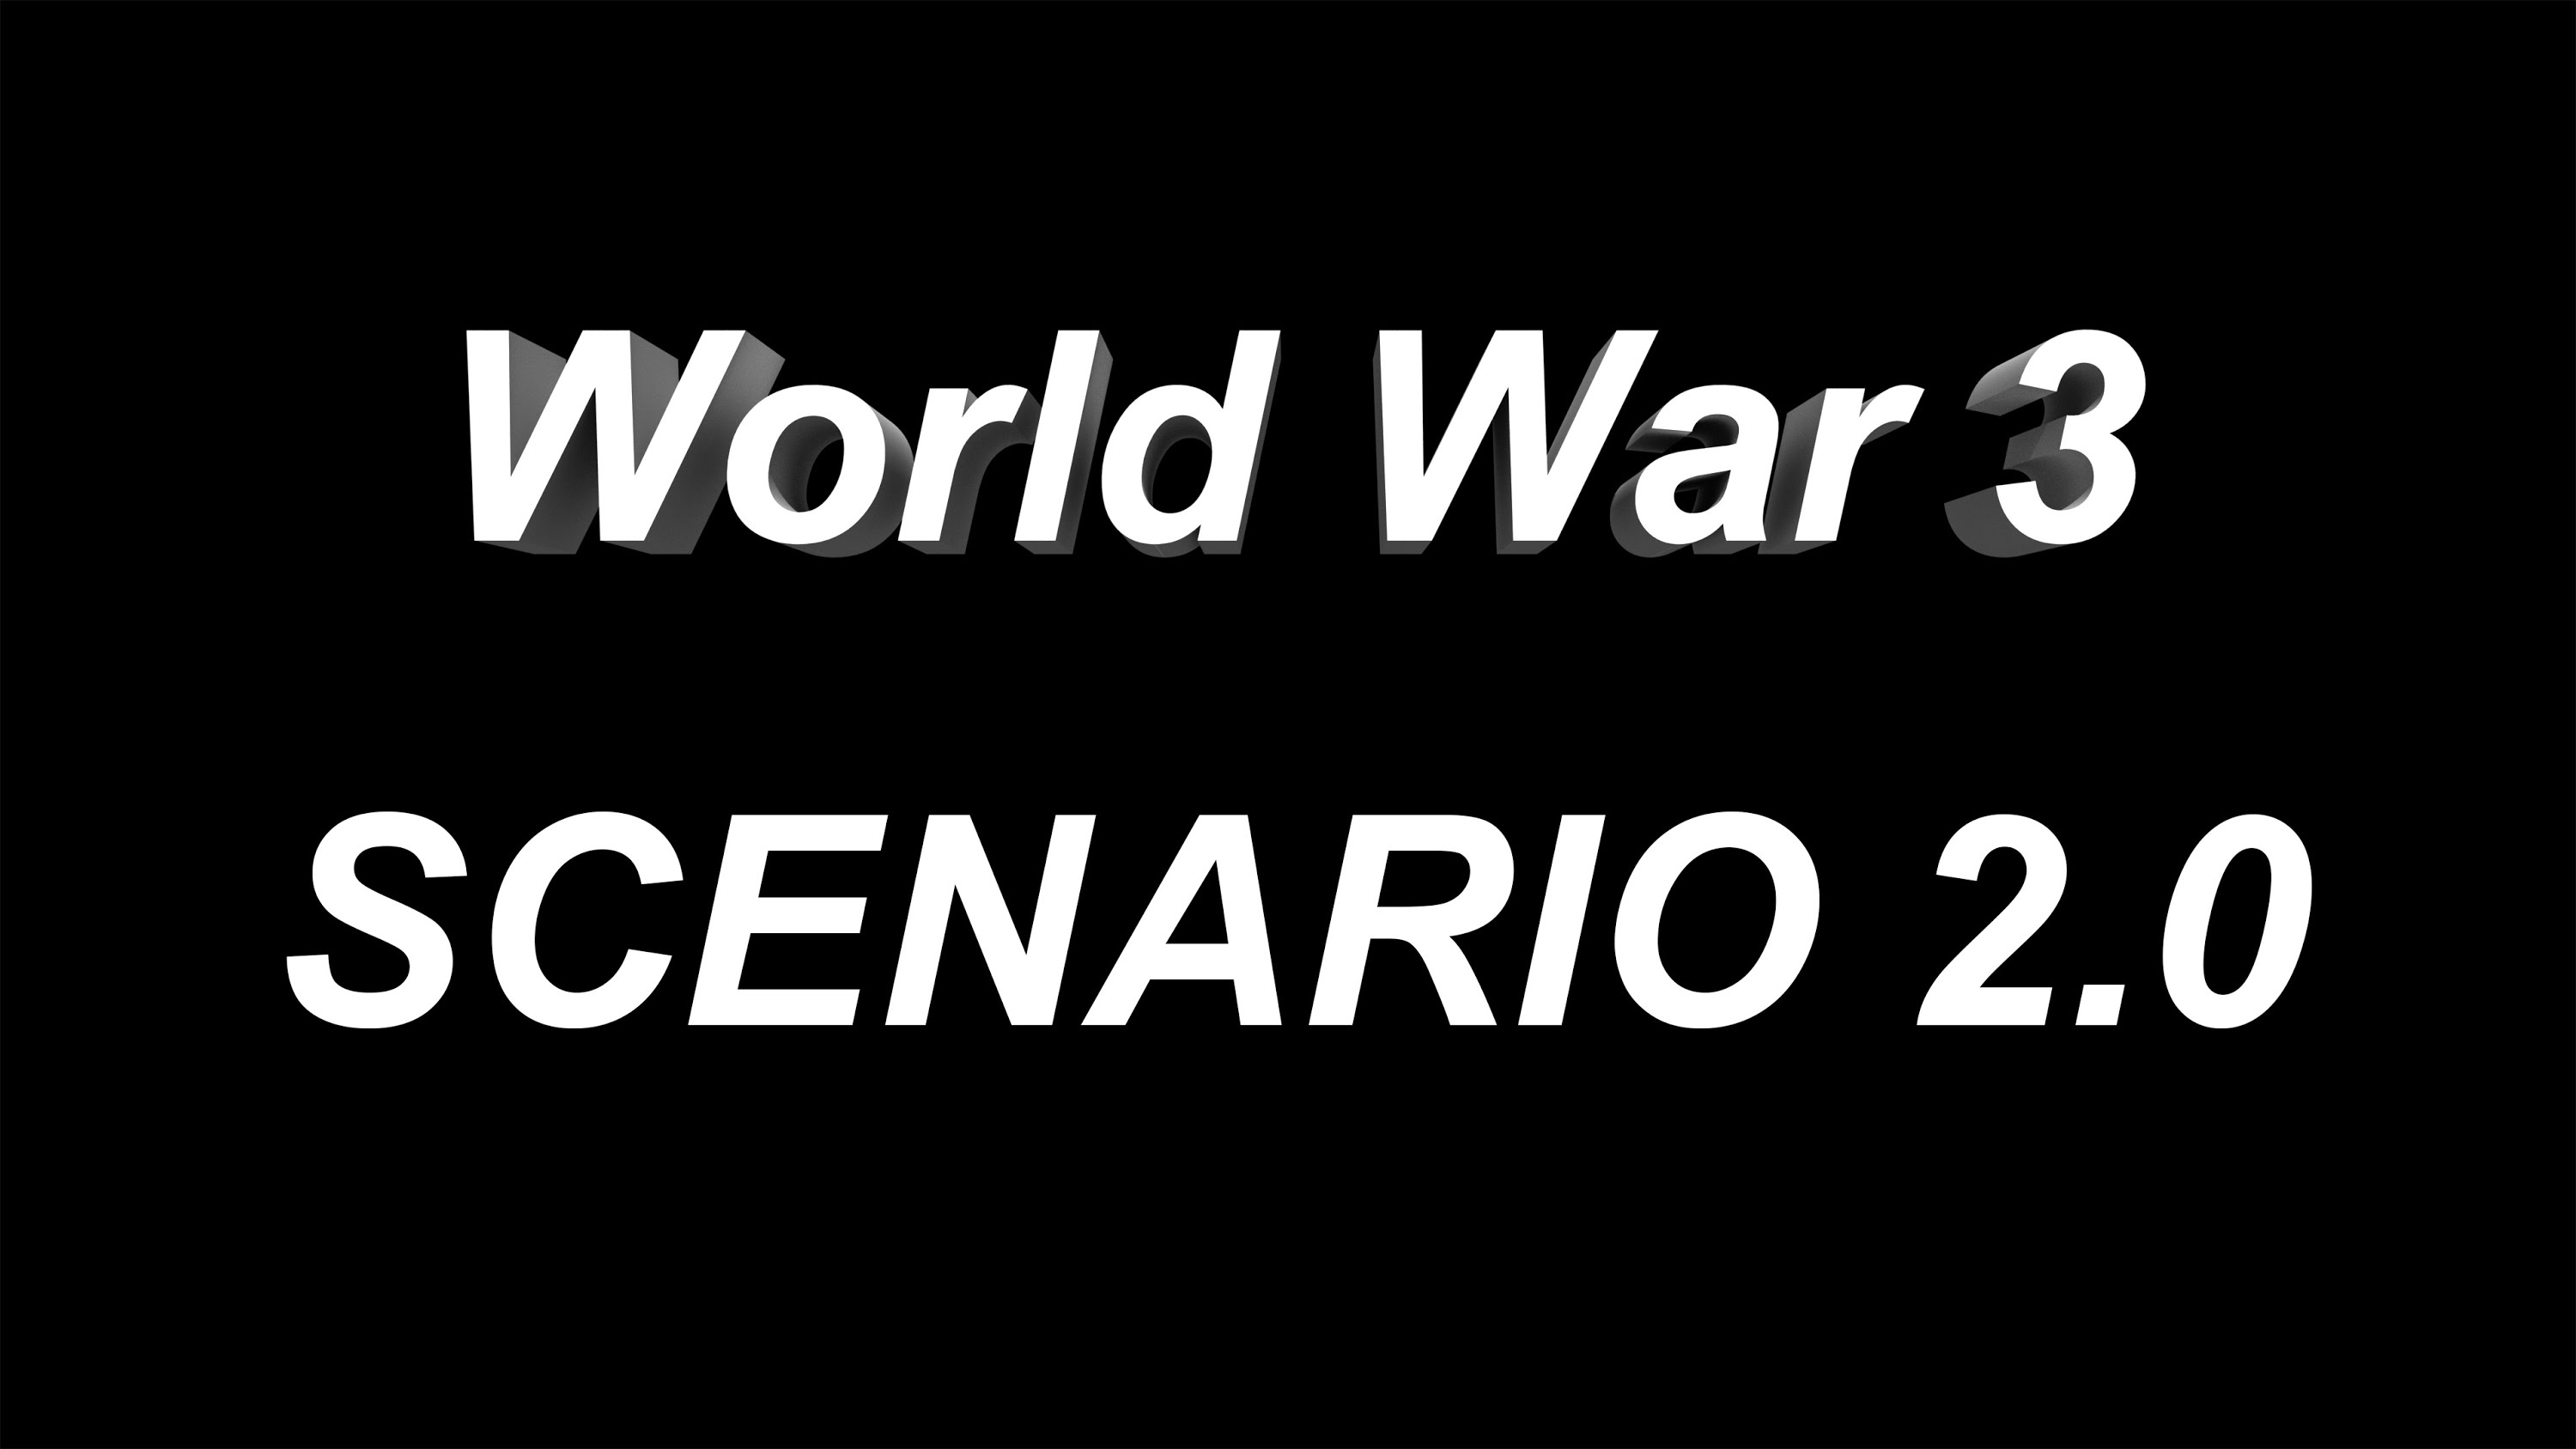 World War 3: Scenario 2.0 (trailer)